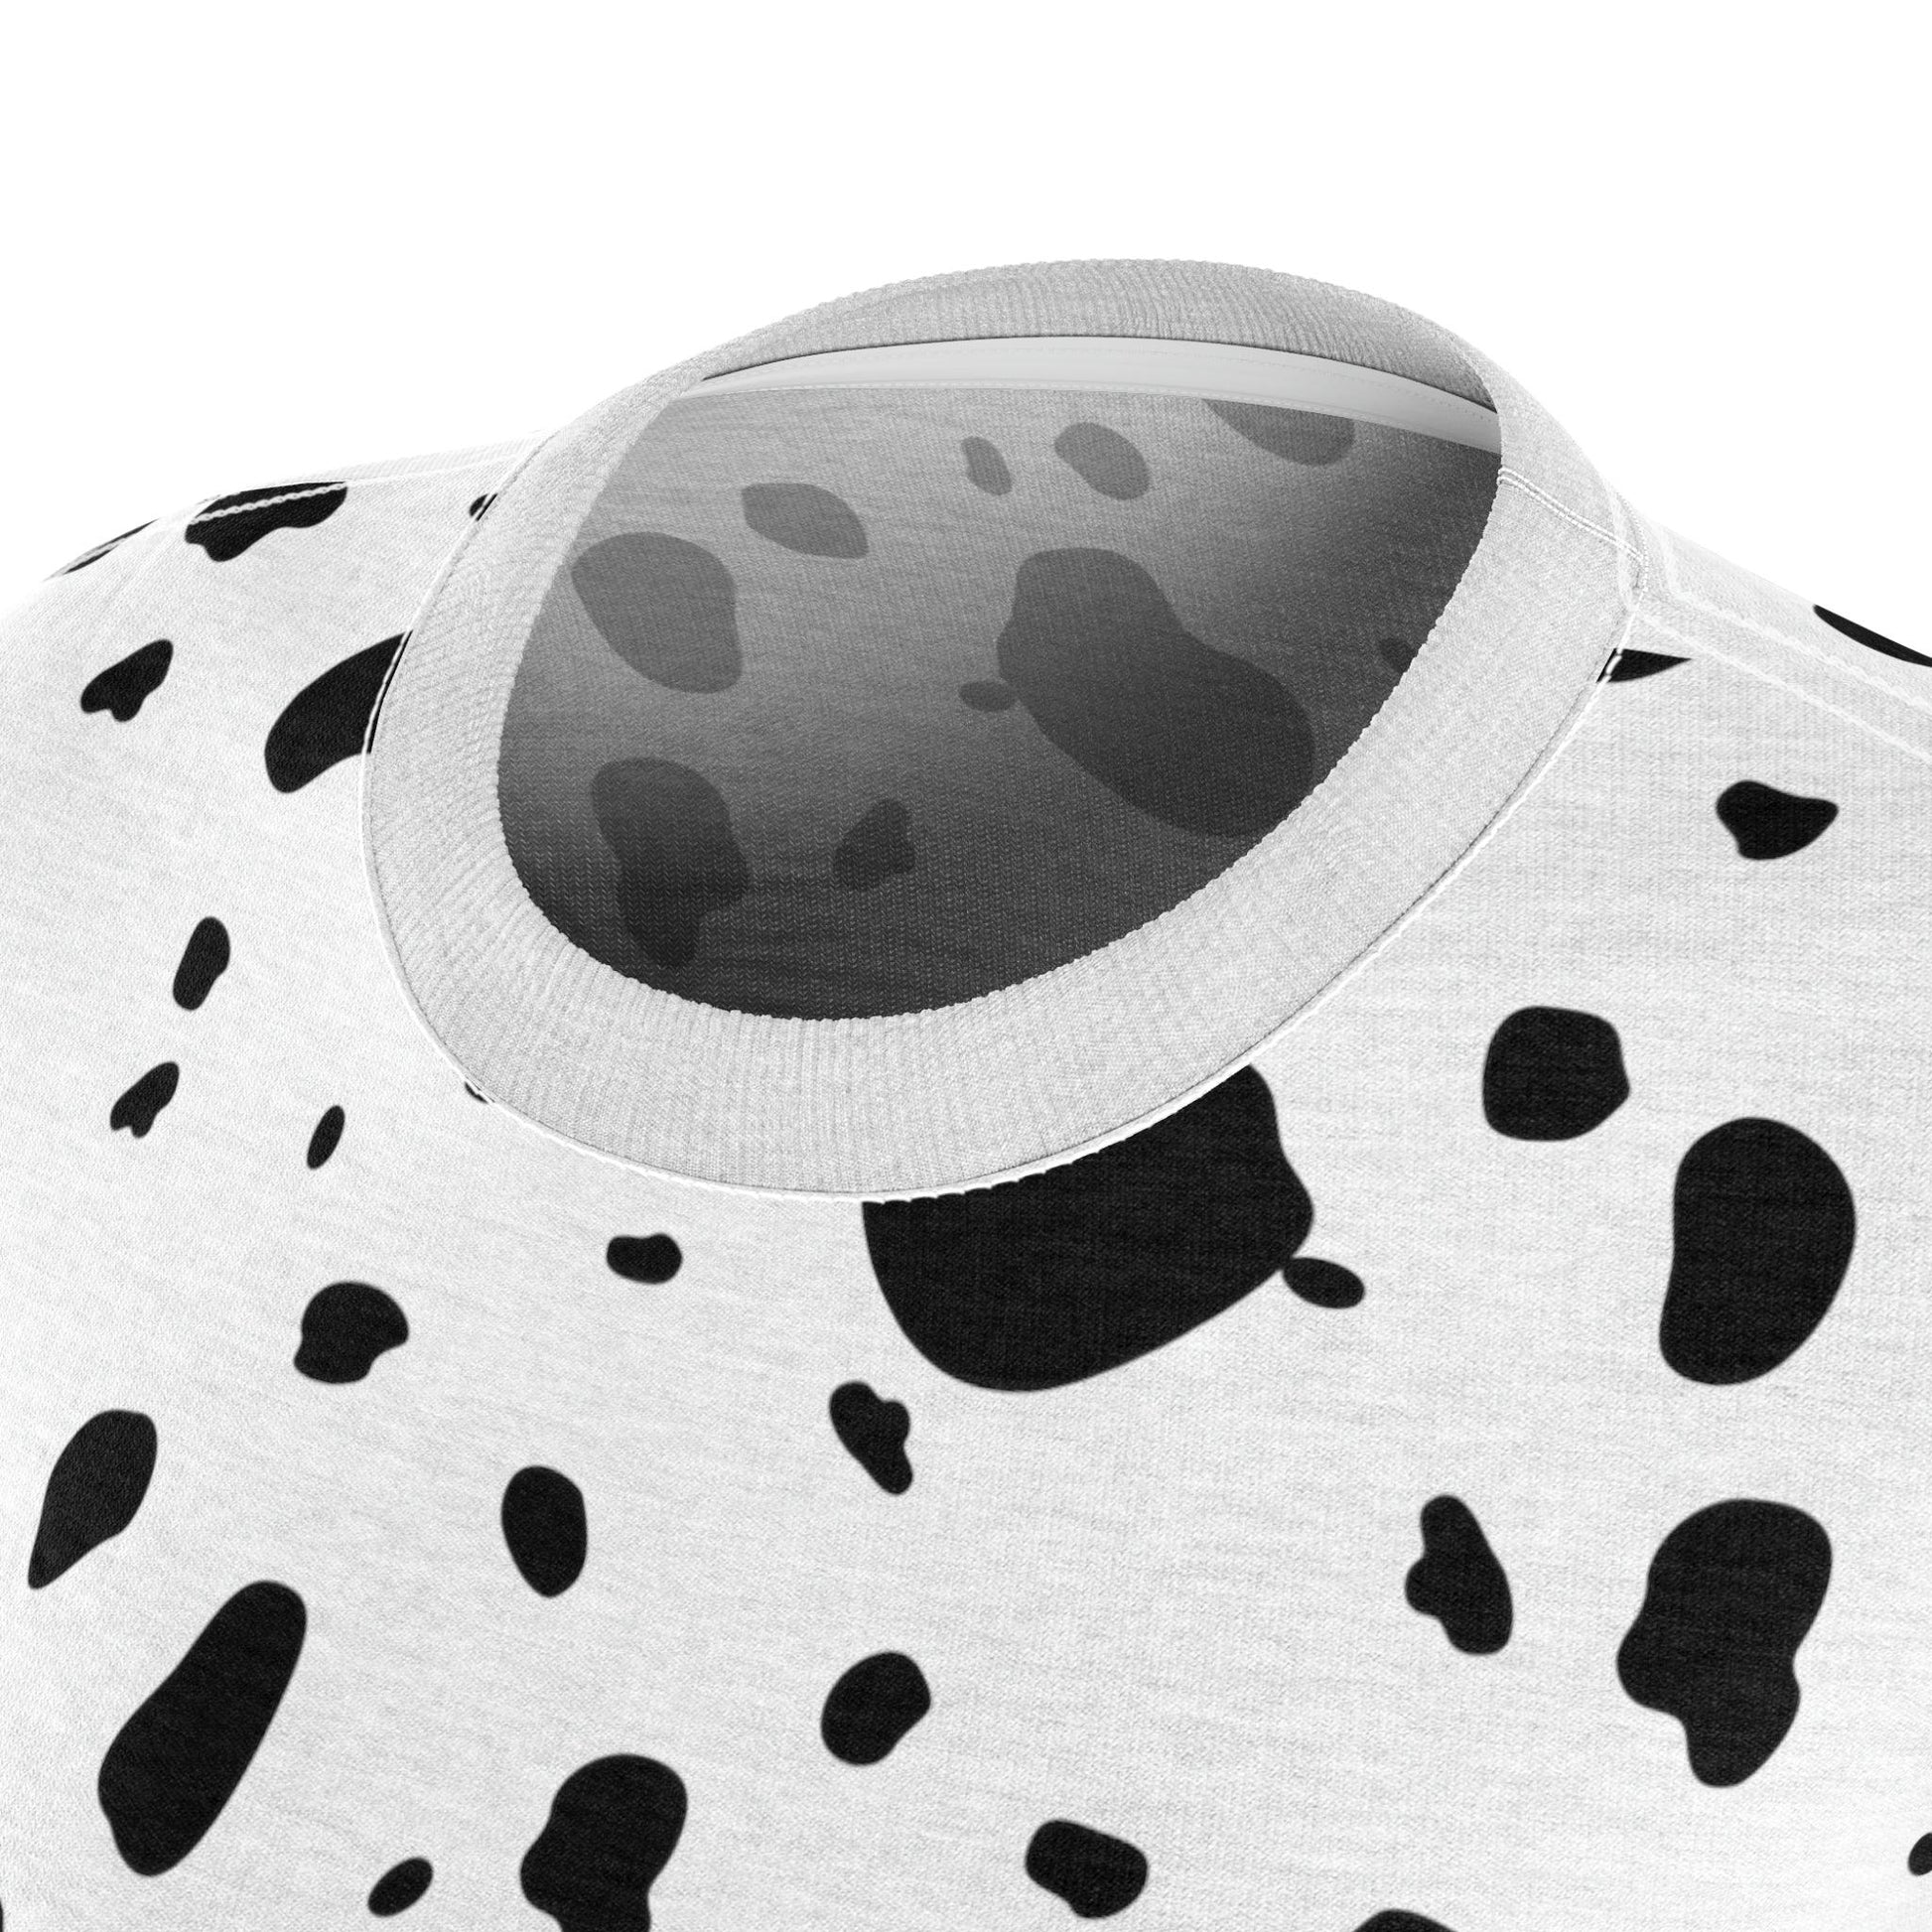 Dalmatian Print Shirt - Women's Style - BentleyBlueCo